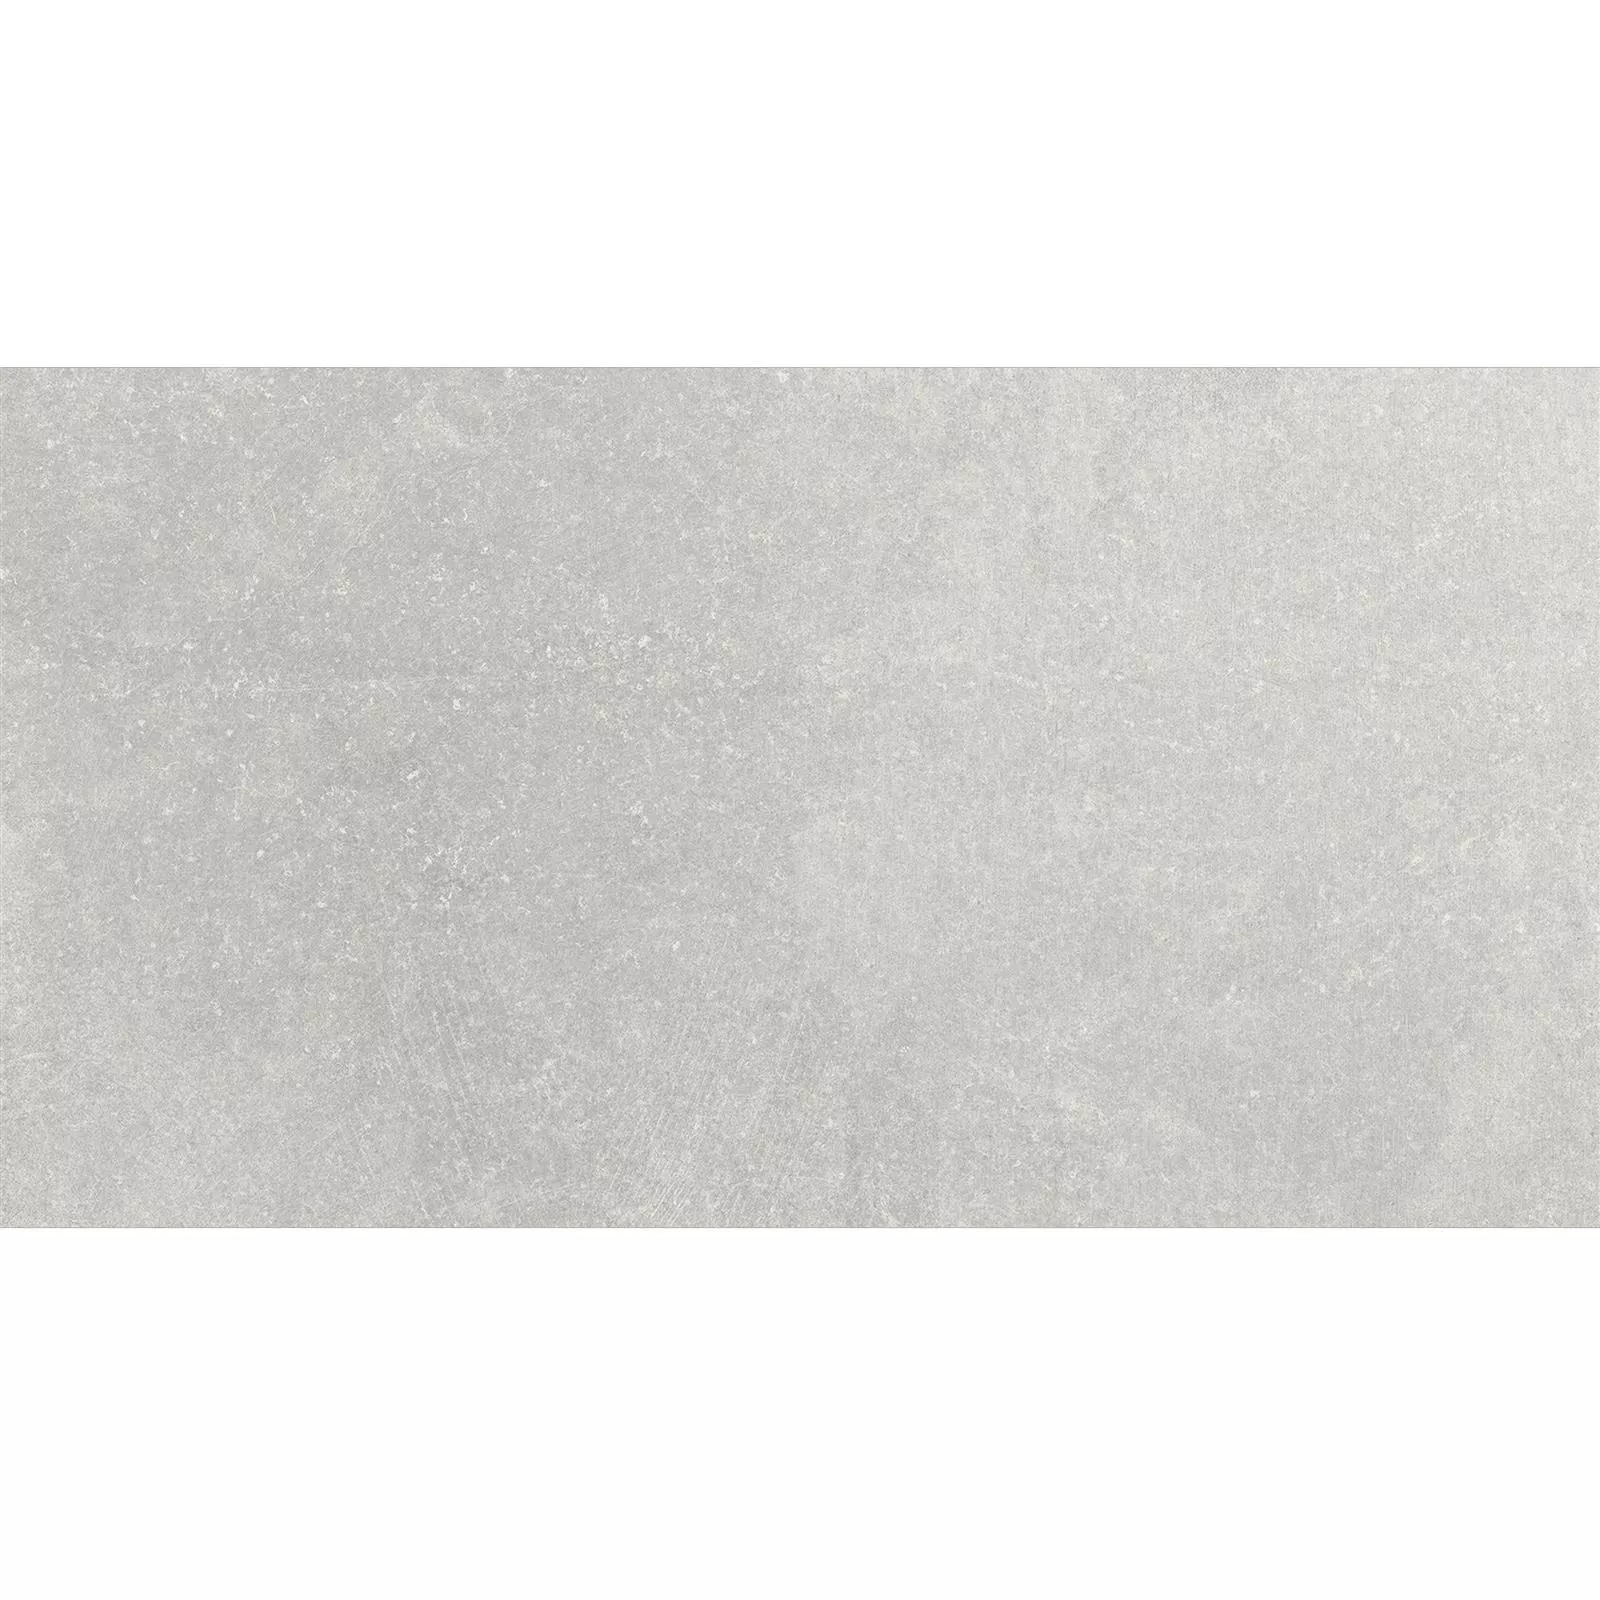 Muster Bodenfliesen Steinoptik Horizon Grau 30x60cm